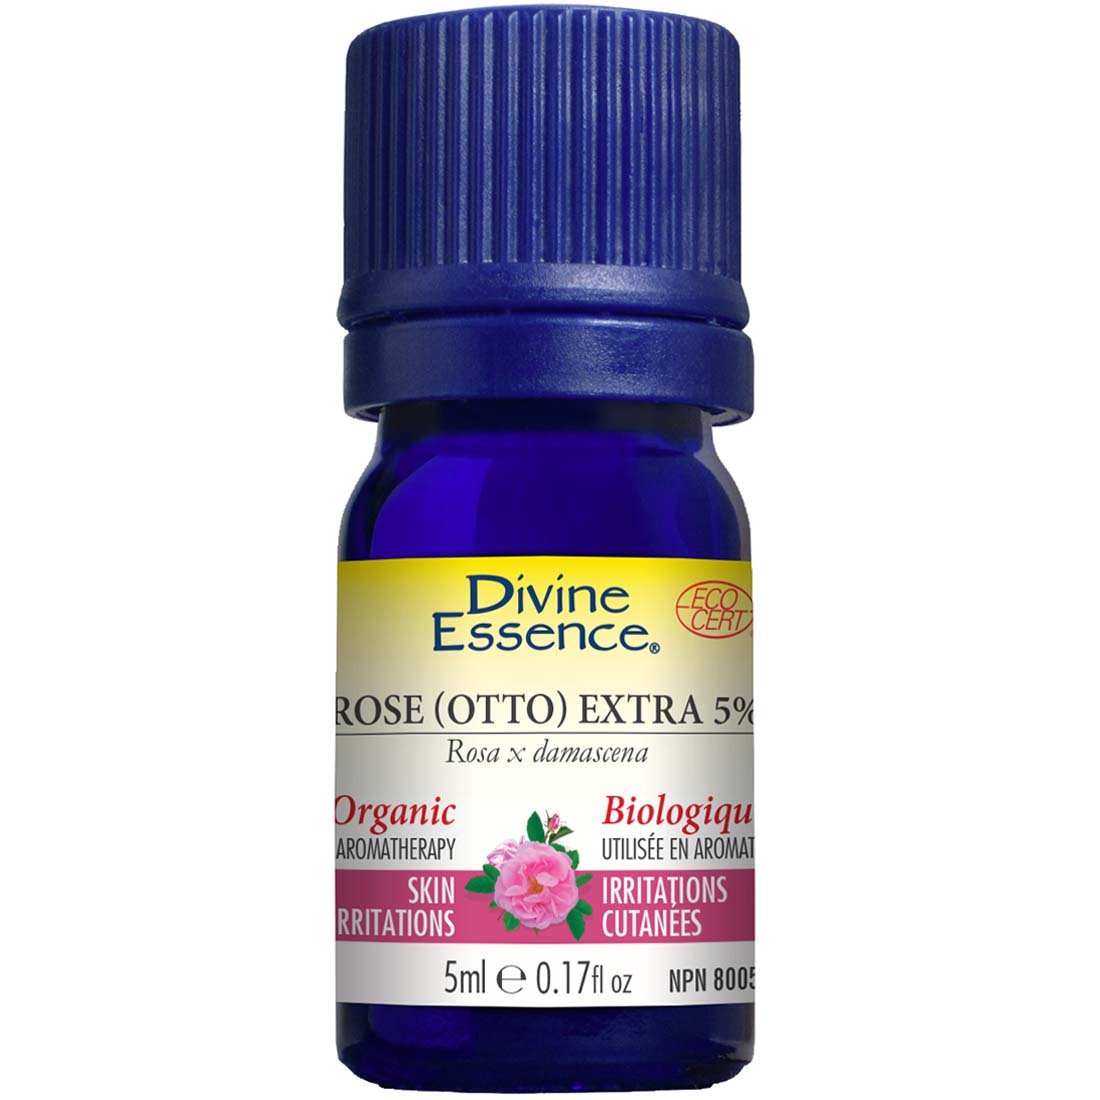 Divine Essence Rose (Otto) Extra 5% Essential Oil (Organic), 5ml